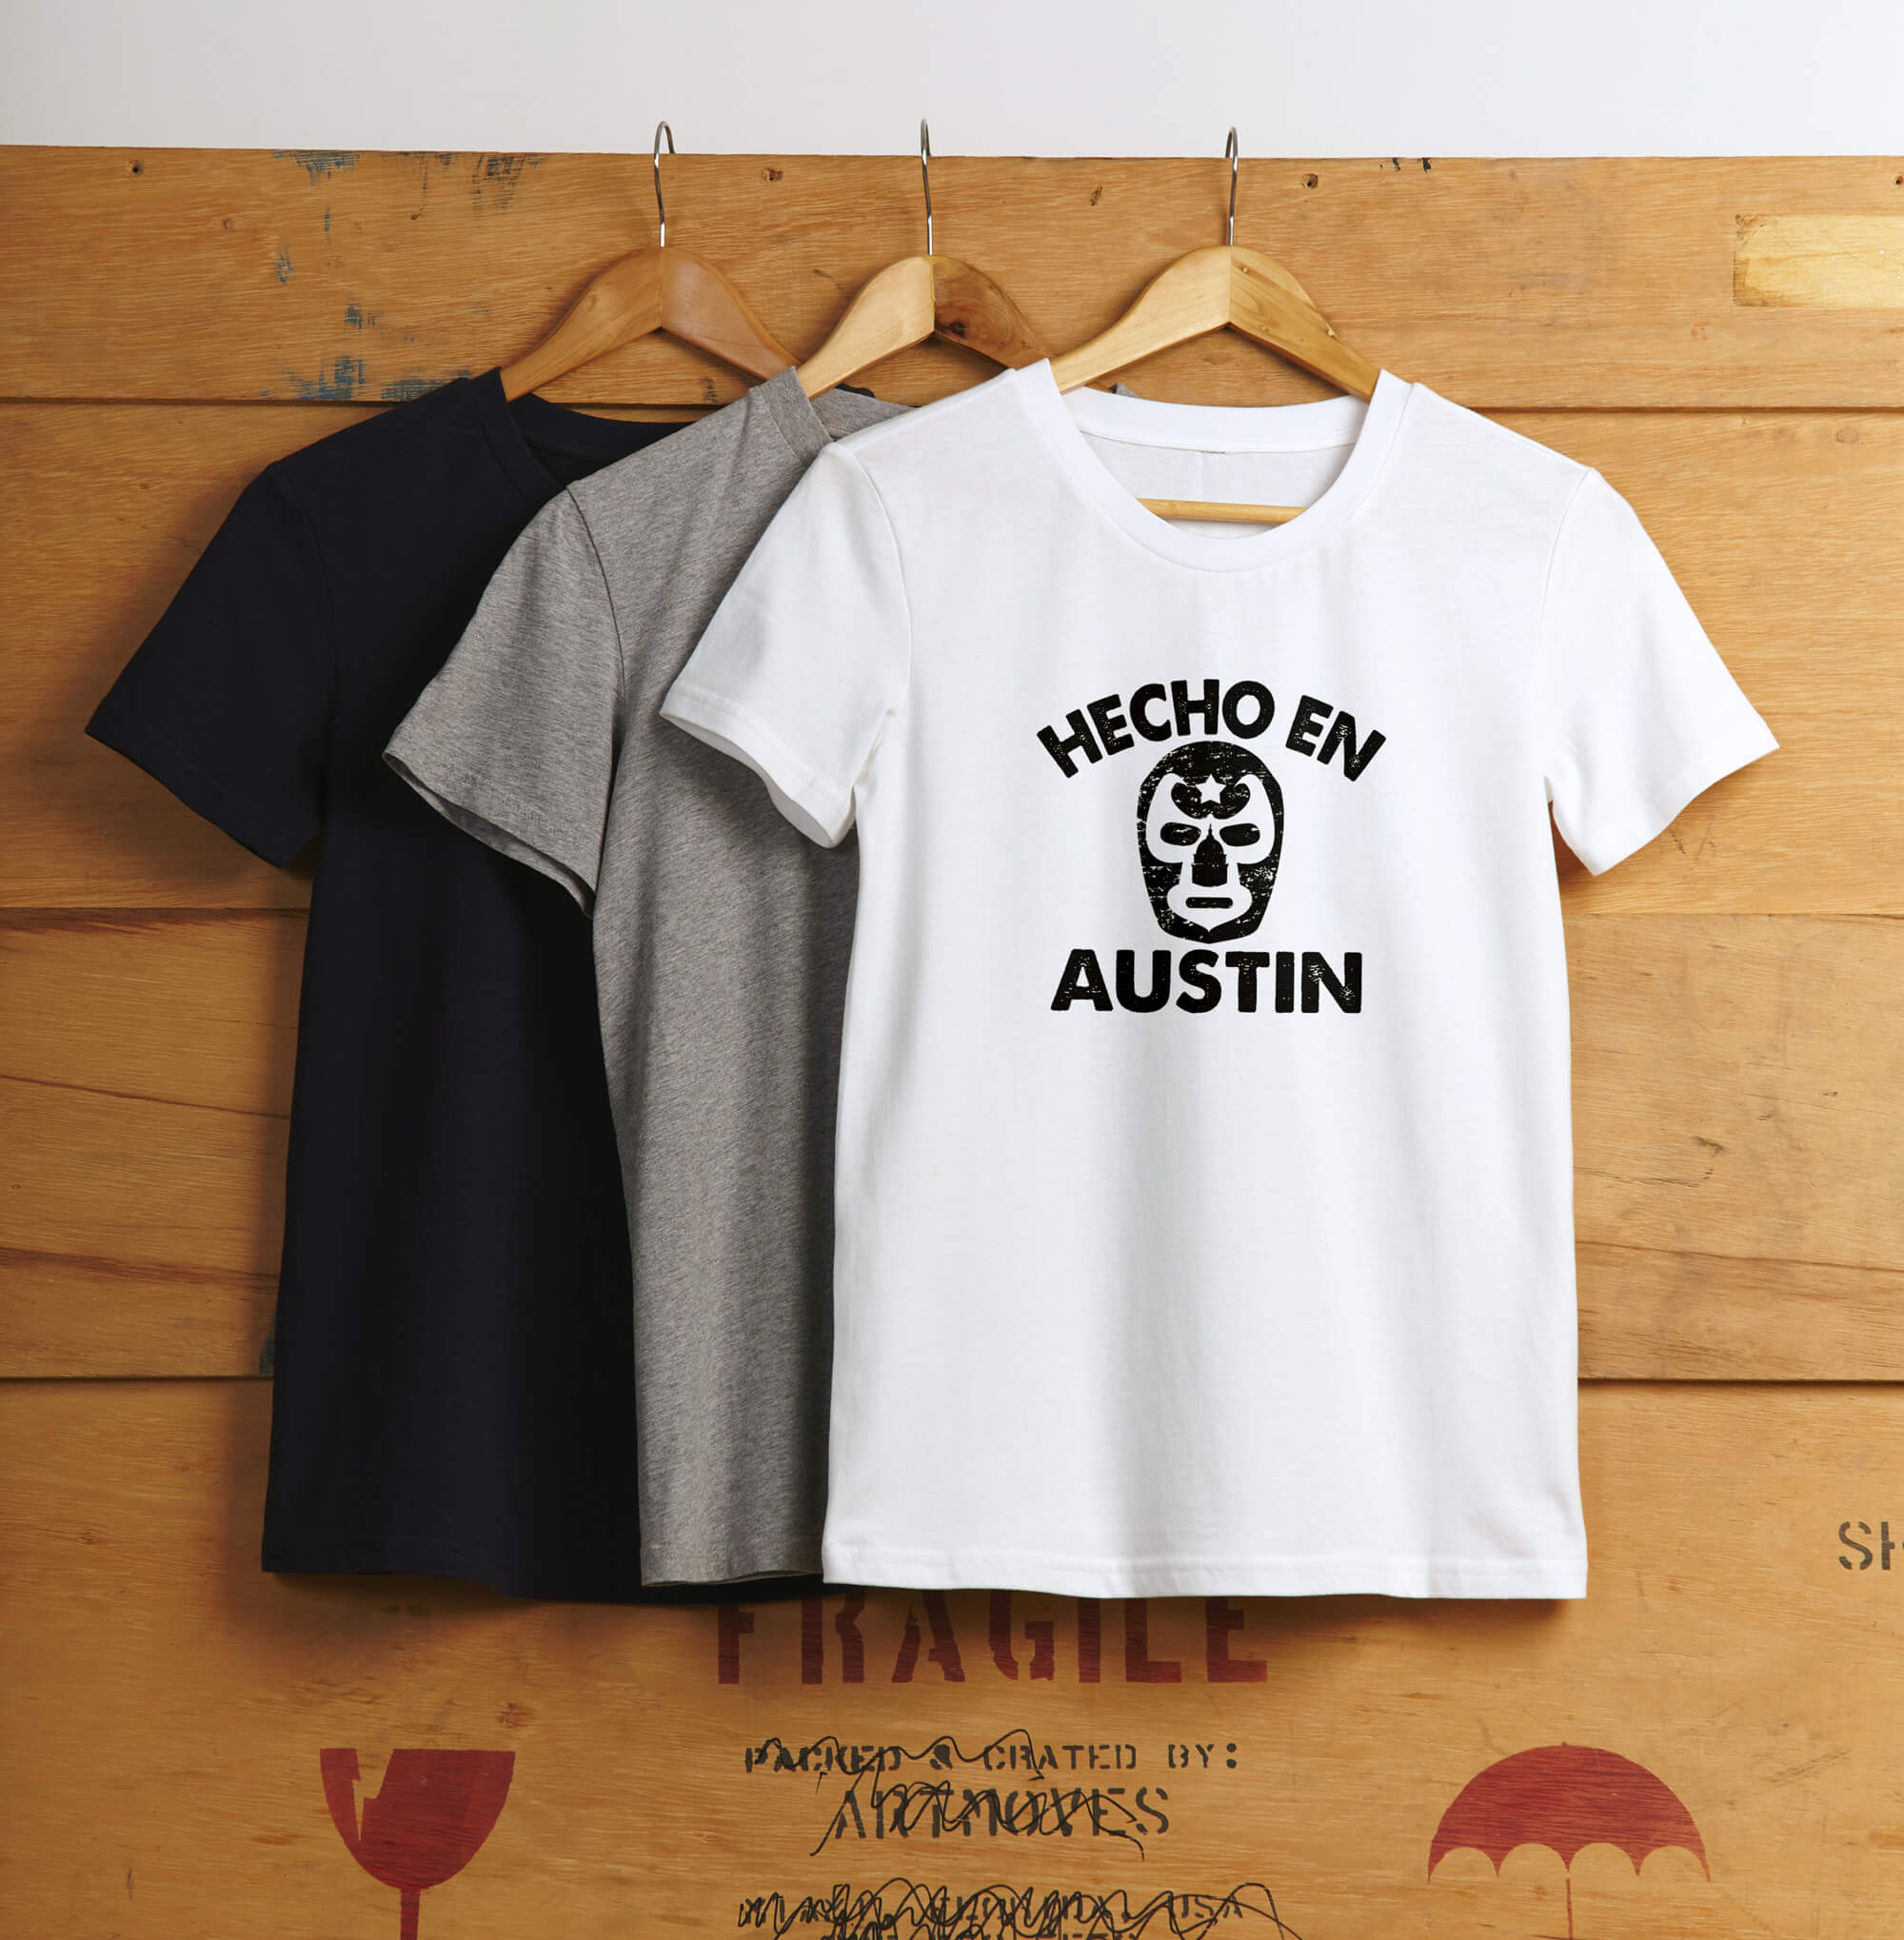 Custom T-Shirts: Simple, Effective Marketing - Oh Boy! Print